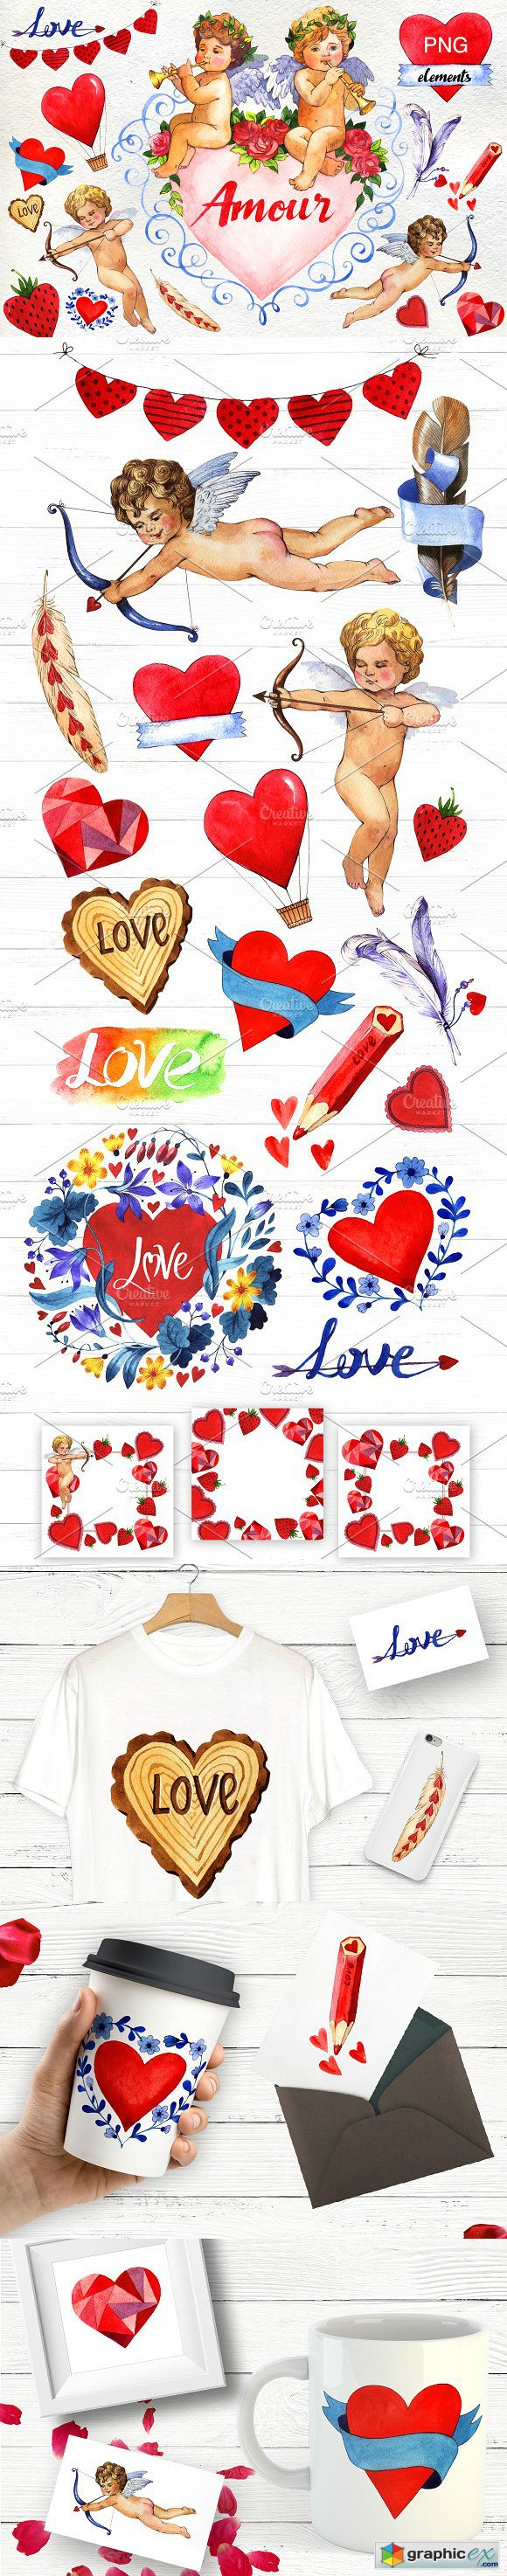 Valentines Day love celebration